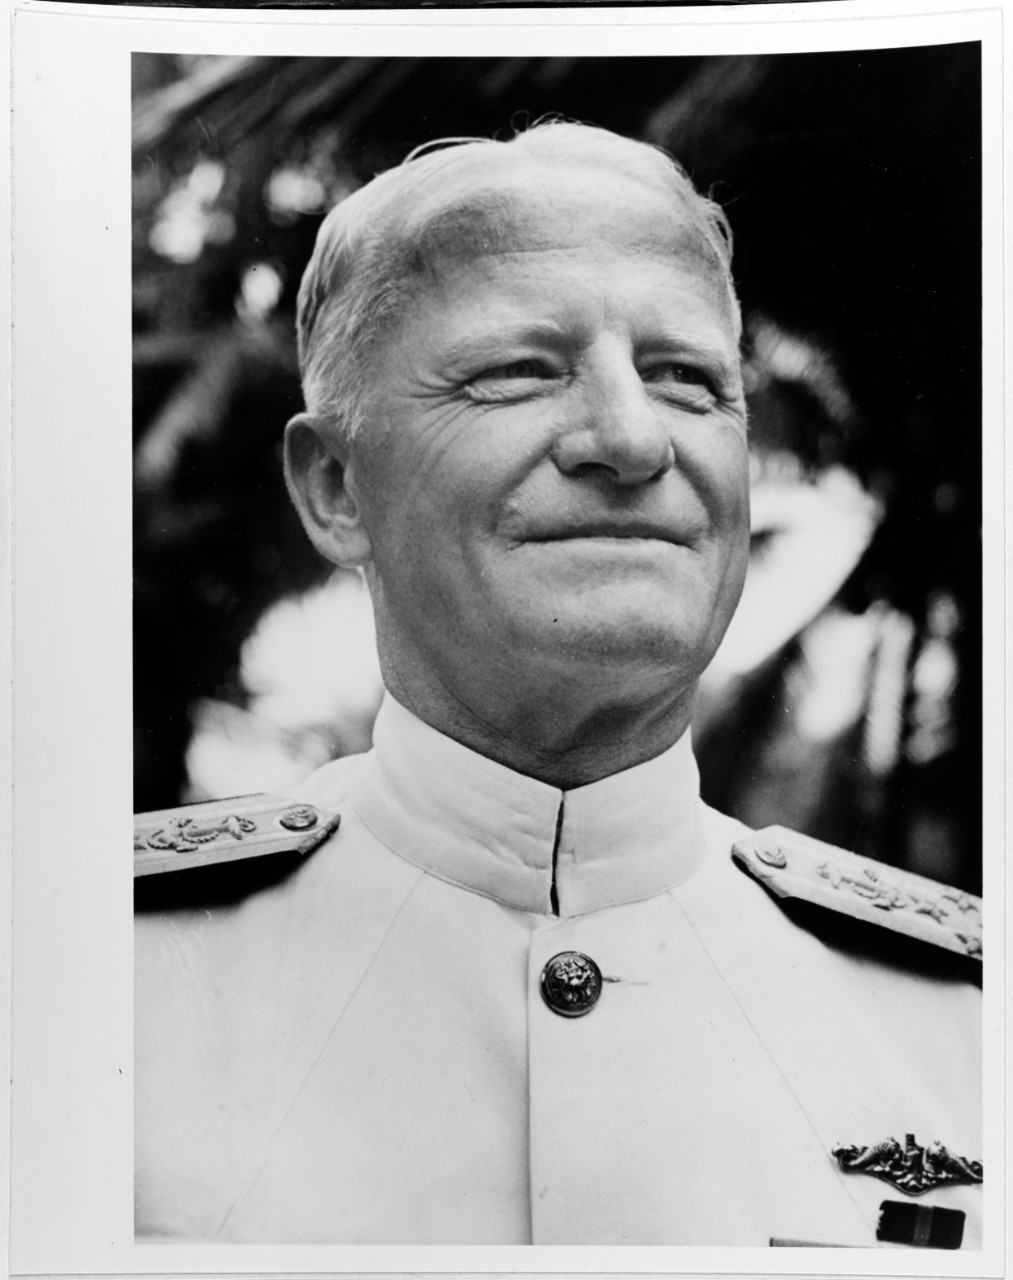 Admiral Chester W. Nimitz